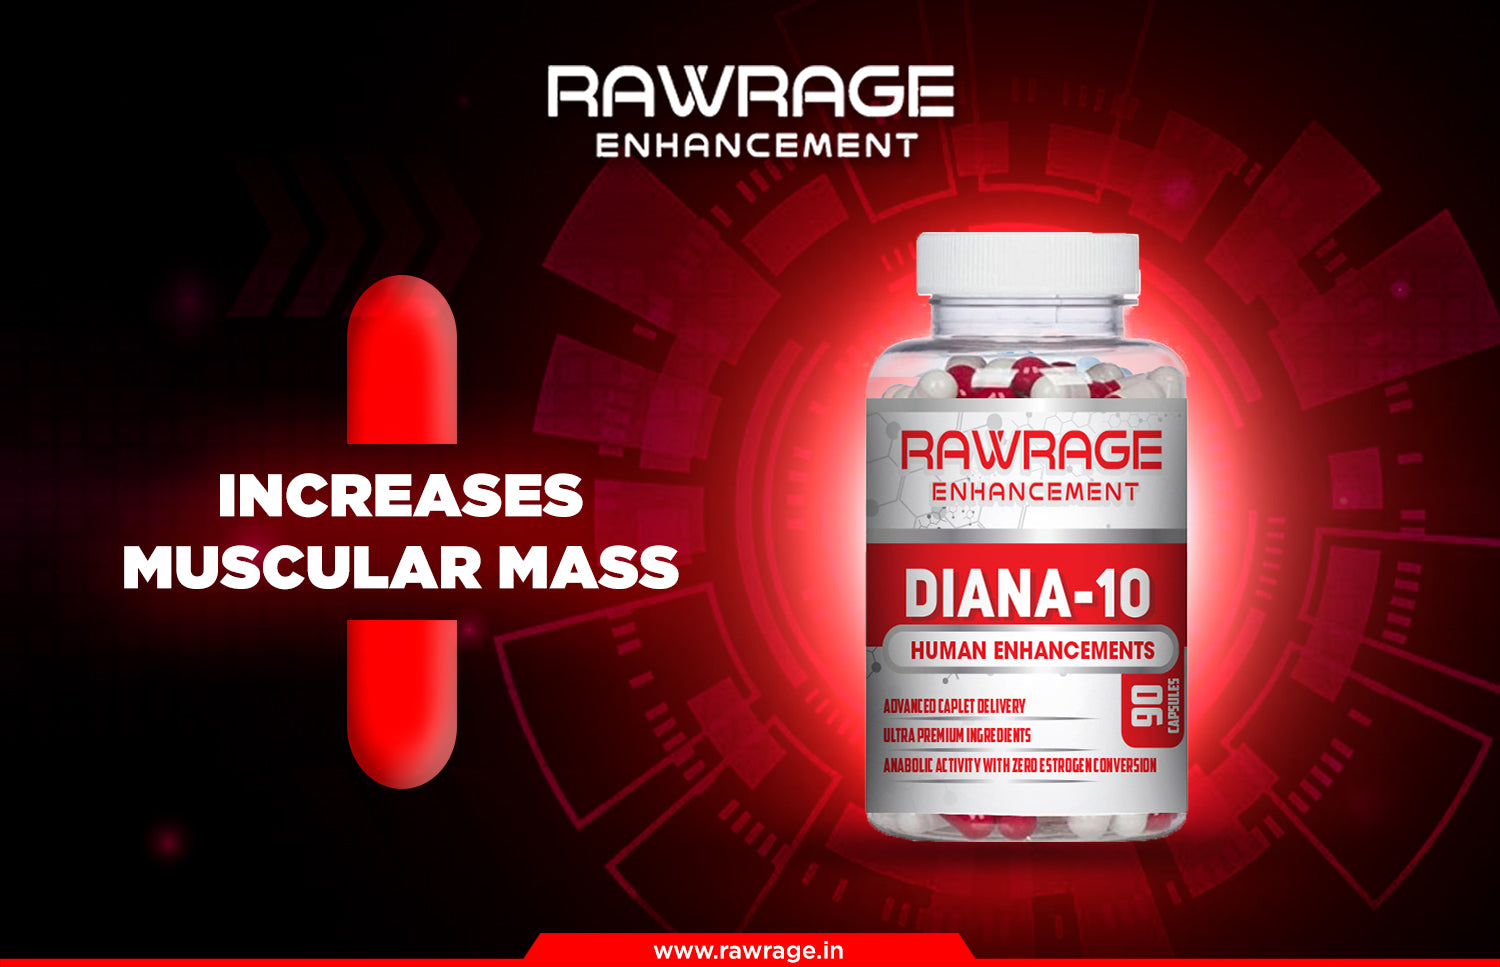 RawRage DIANA-10 l Ultimate Size Gain Formula l Human Enhancement Solution